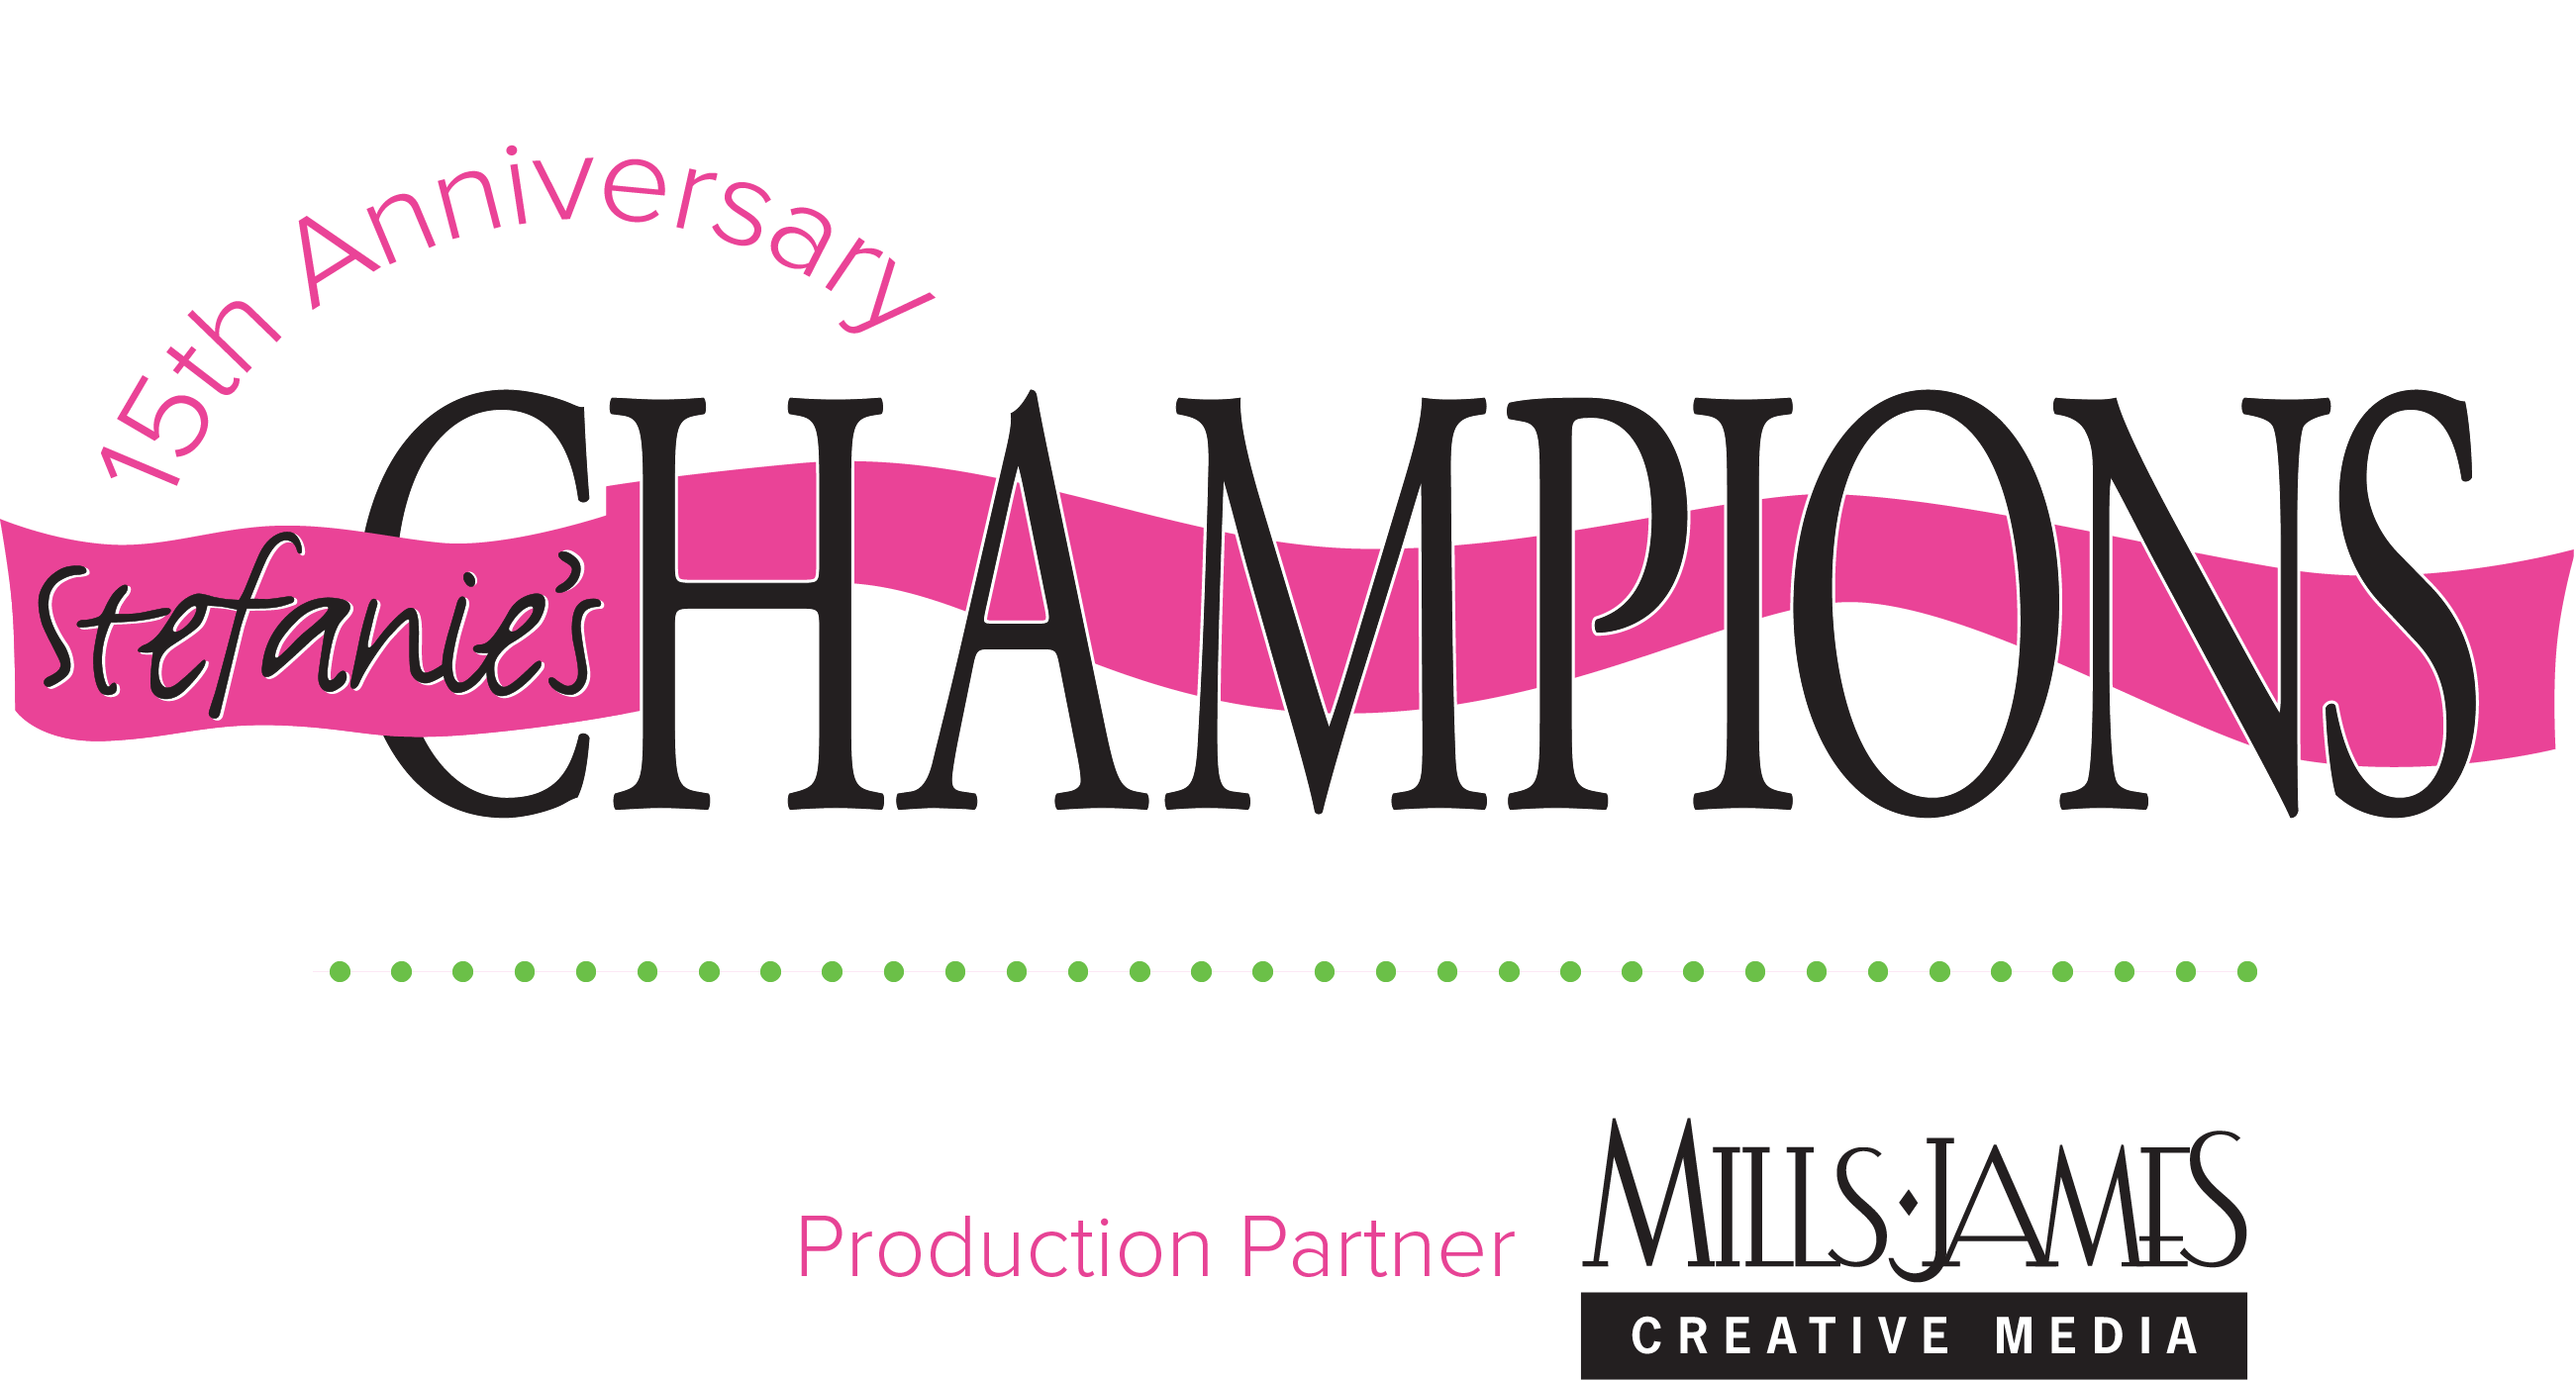 Champions 15th Anniversary Logo